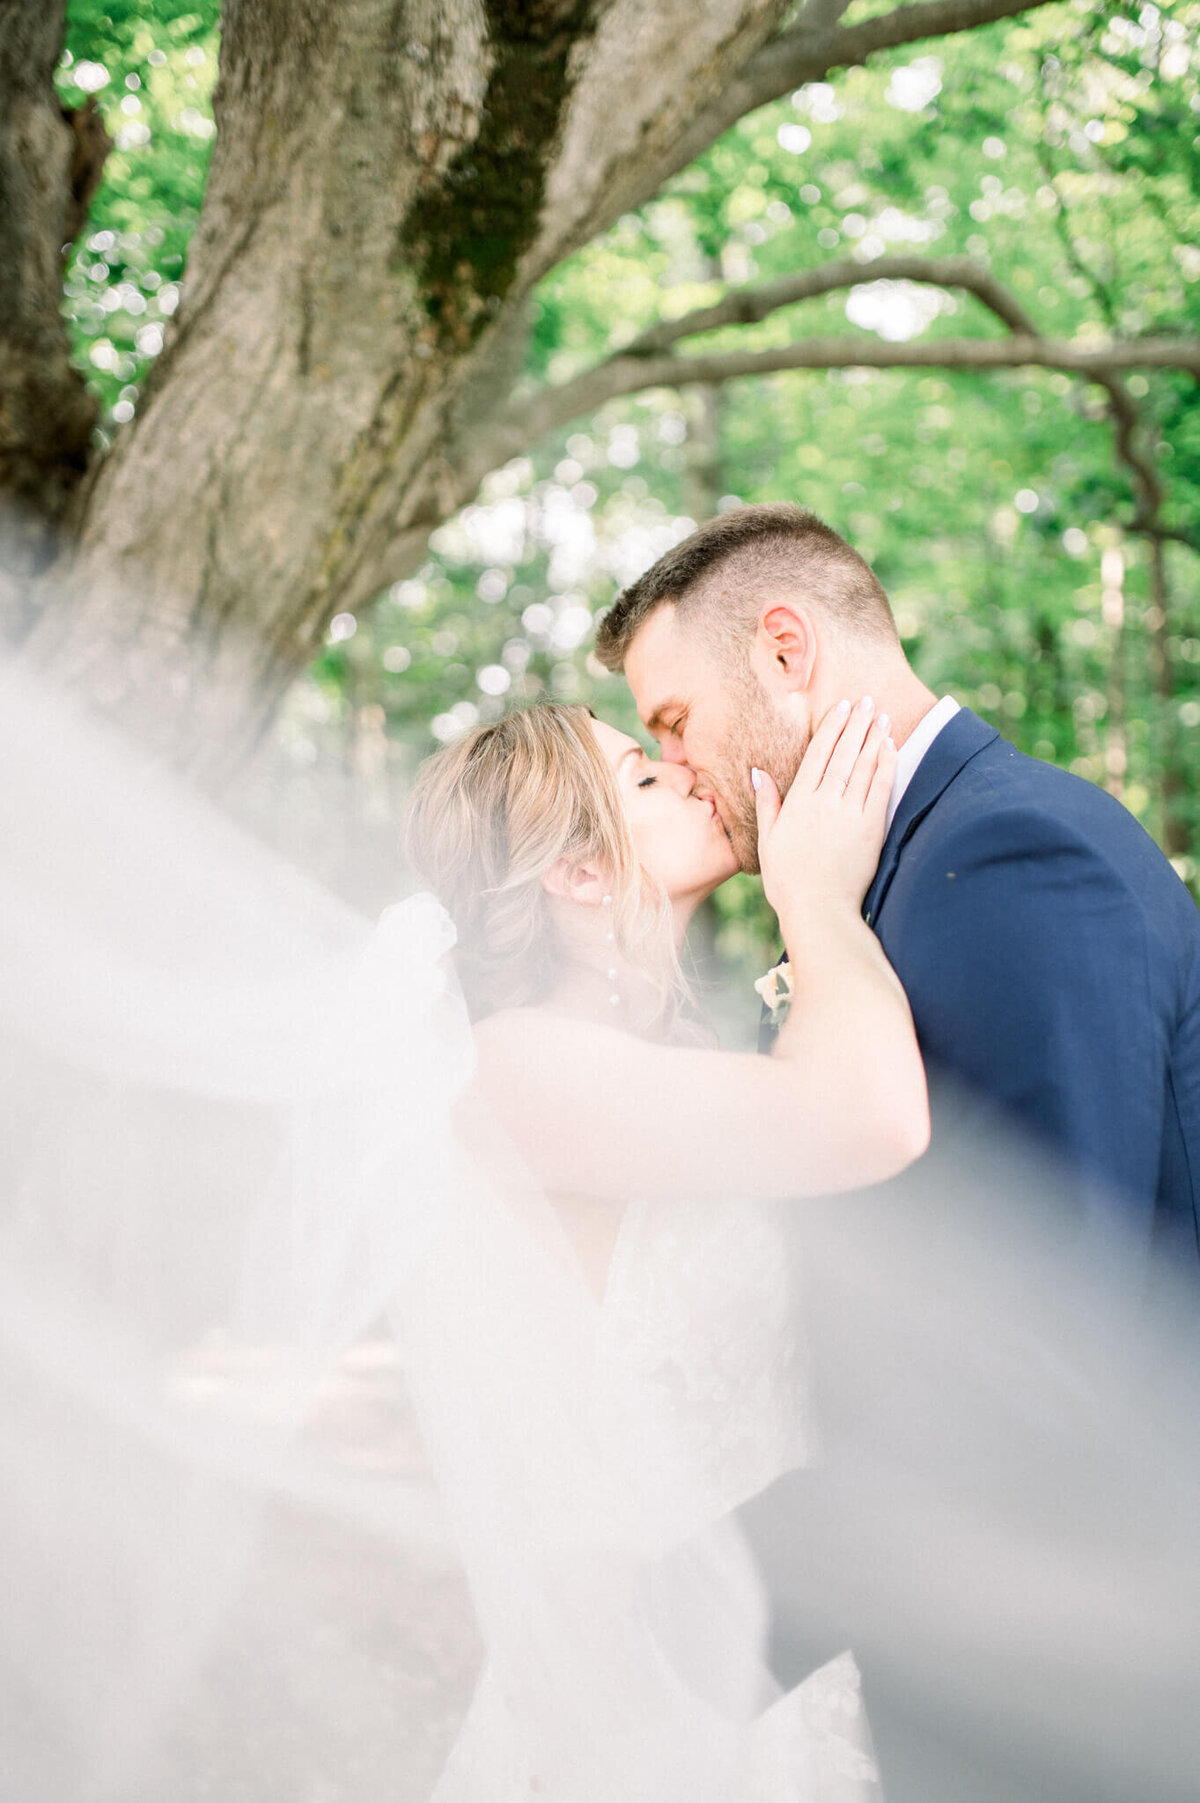 Wedding veil covering lens while bride and groom kiss for Toronto wedding photographer